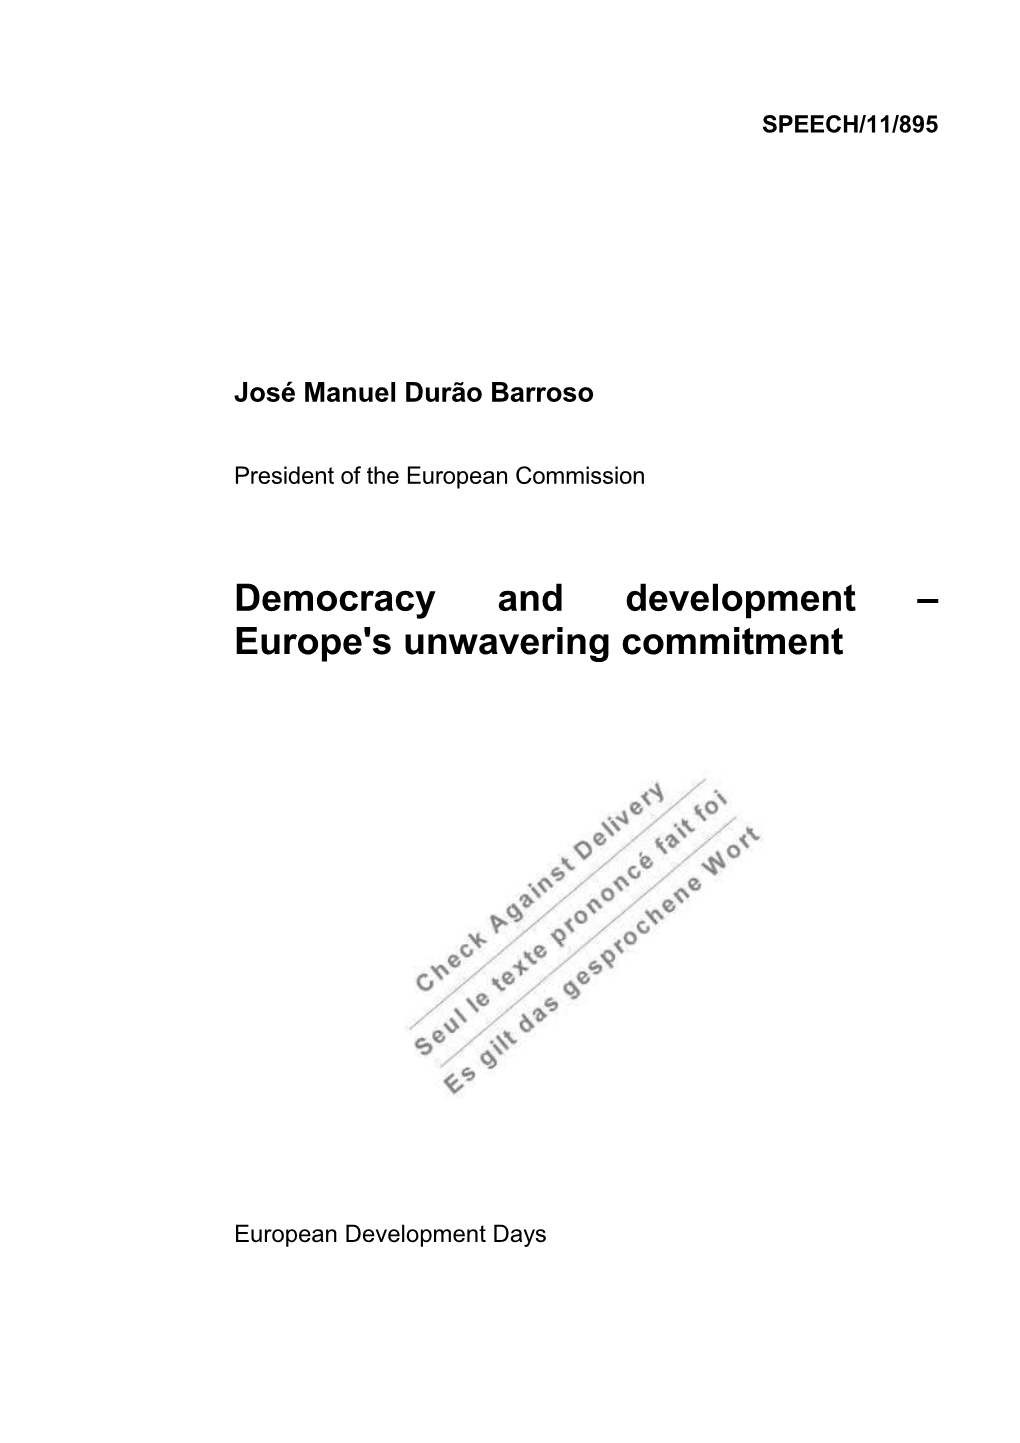 Democracy and Development Europe's Unwavering Commitment